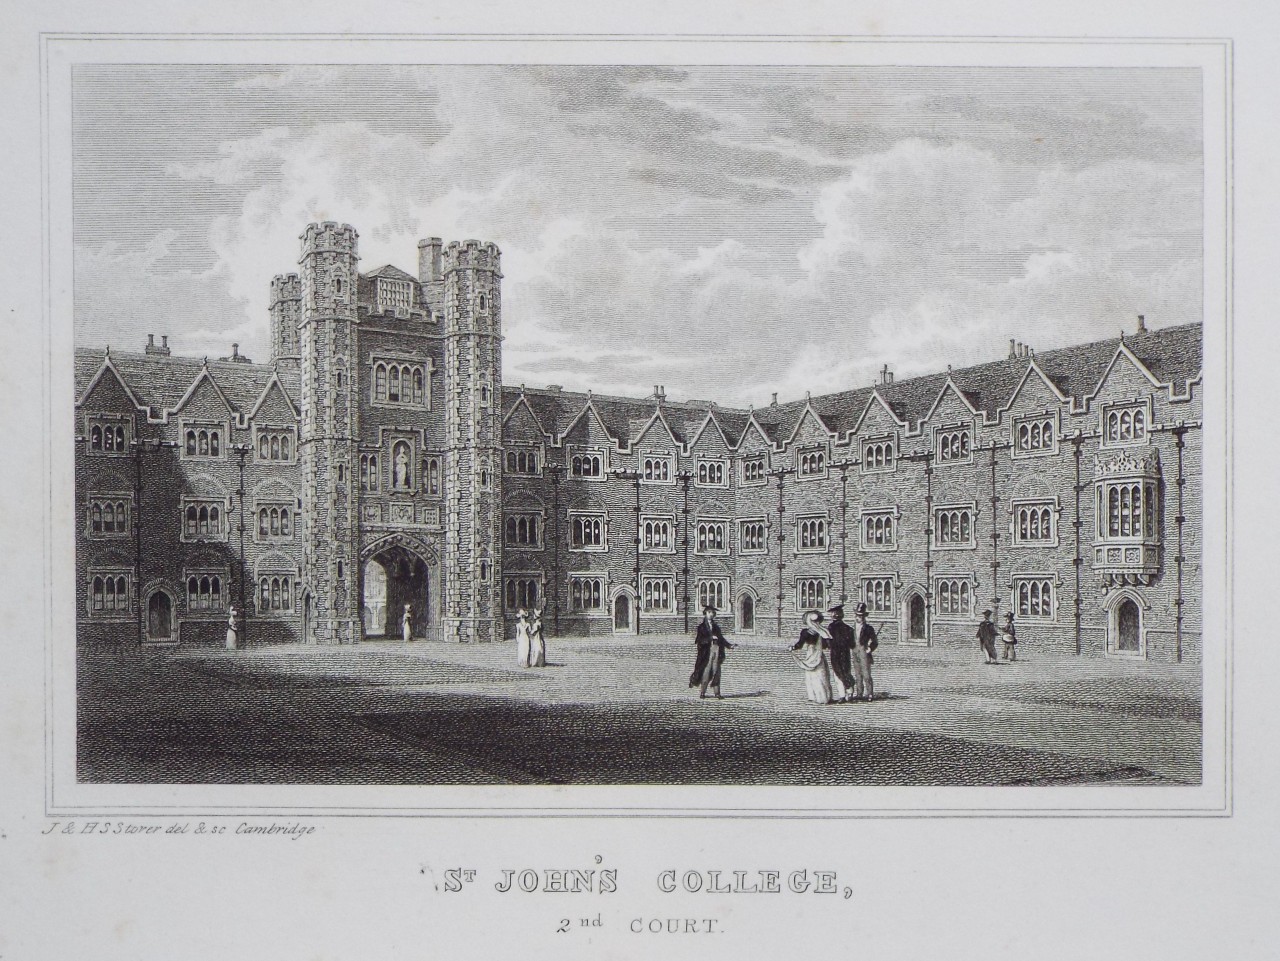 Print - St. John's College, 2nd Court. - Storer